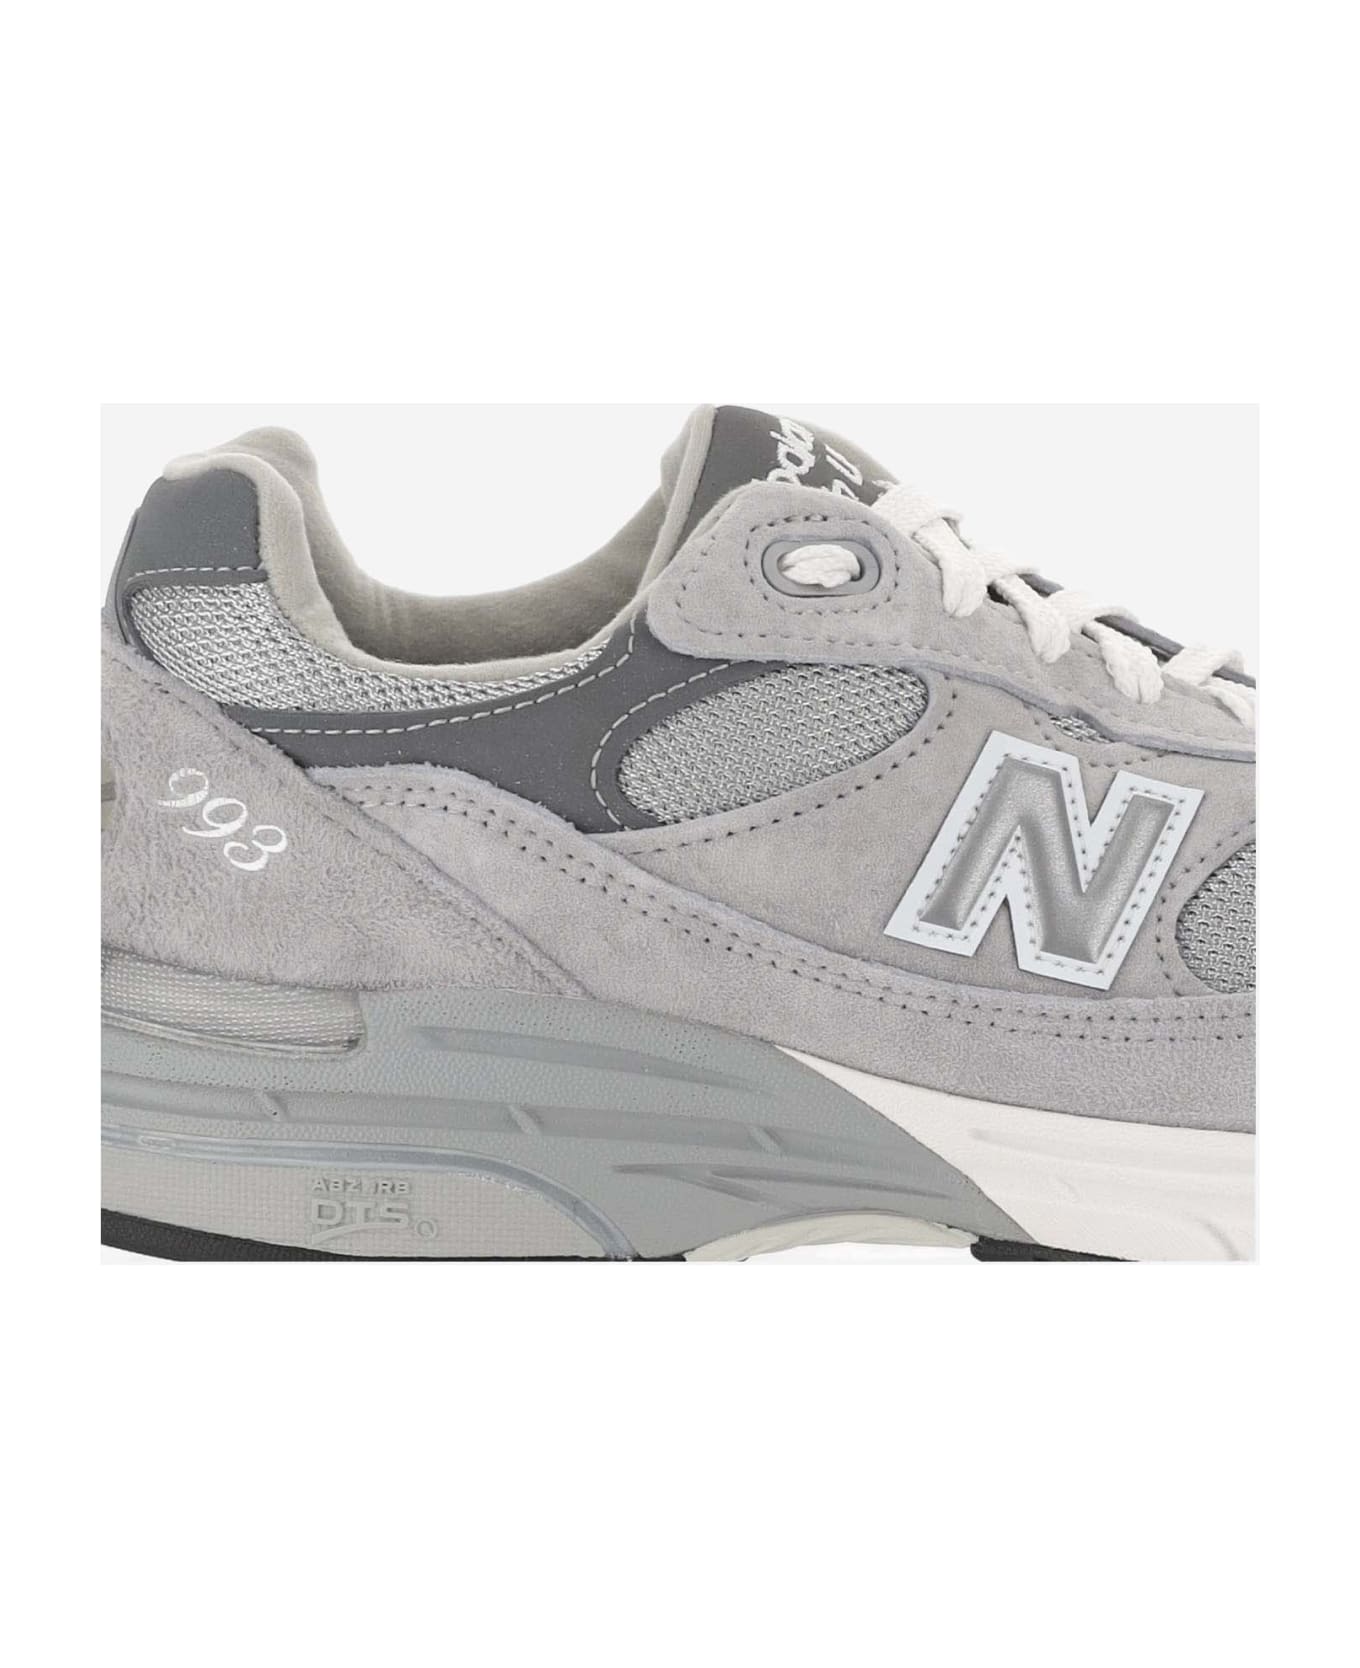 New Balance Sneakers 993 Core - Grey